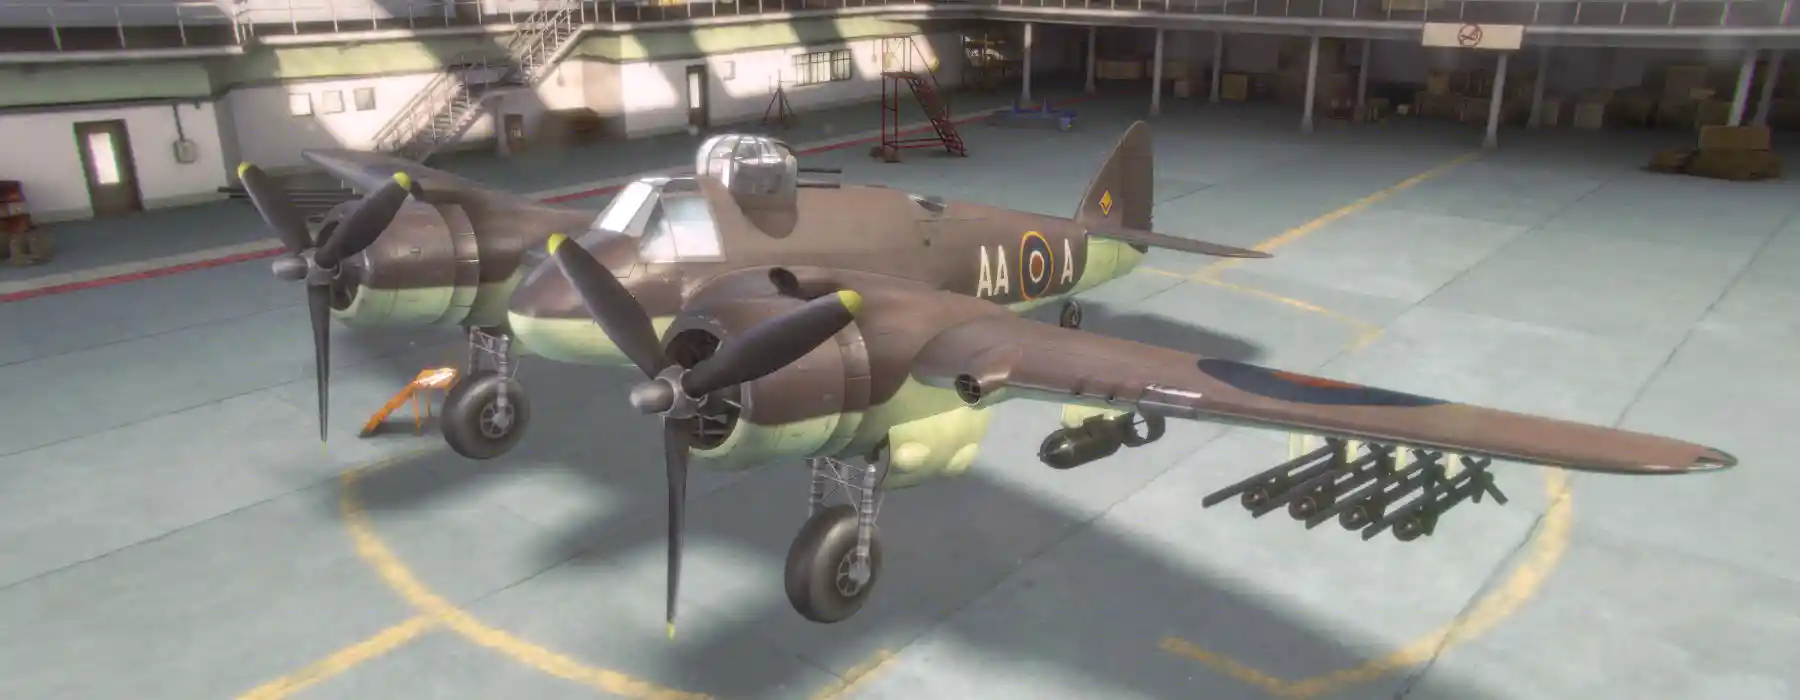 Beaufighter_002.jpg